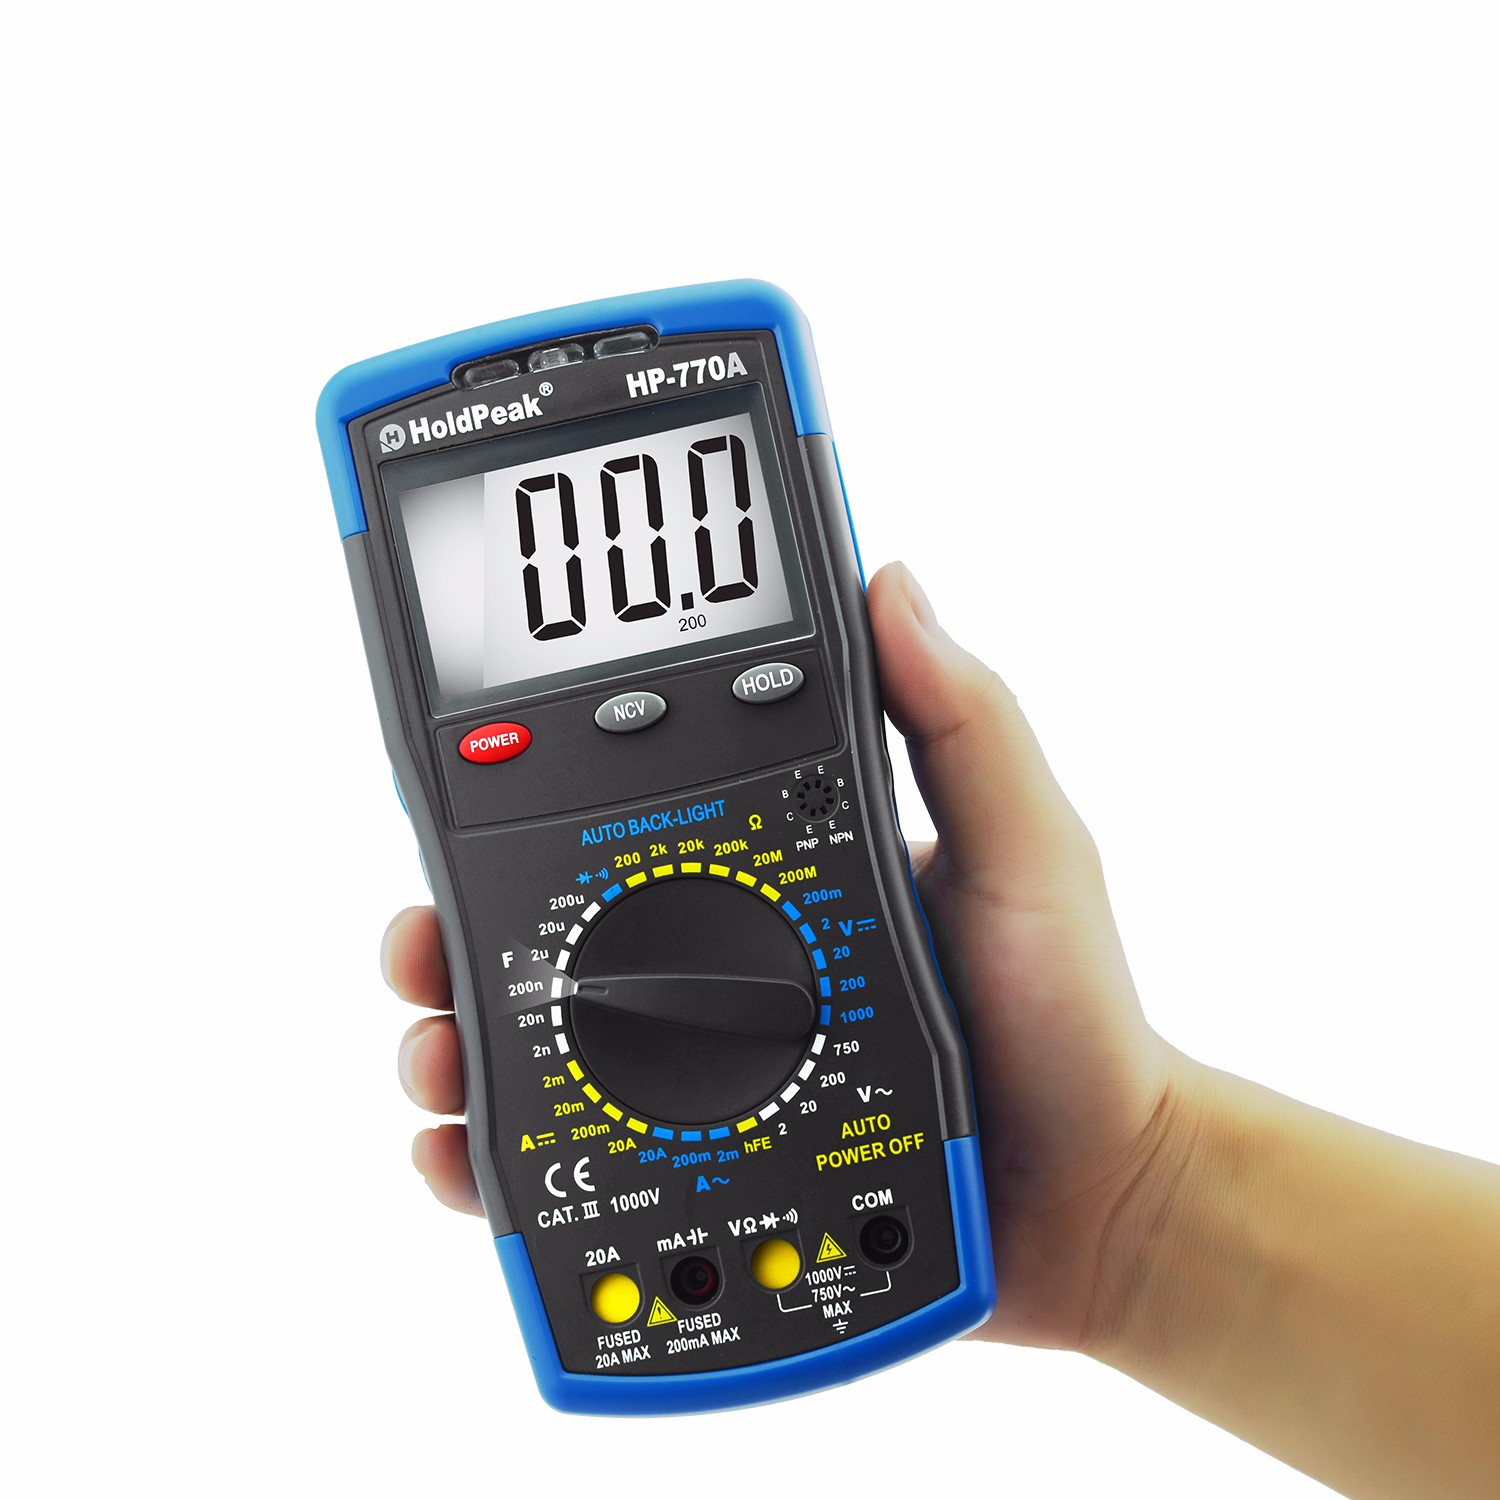 HoldPeak good looking voltmeter meter for business for measurements